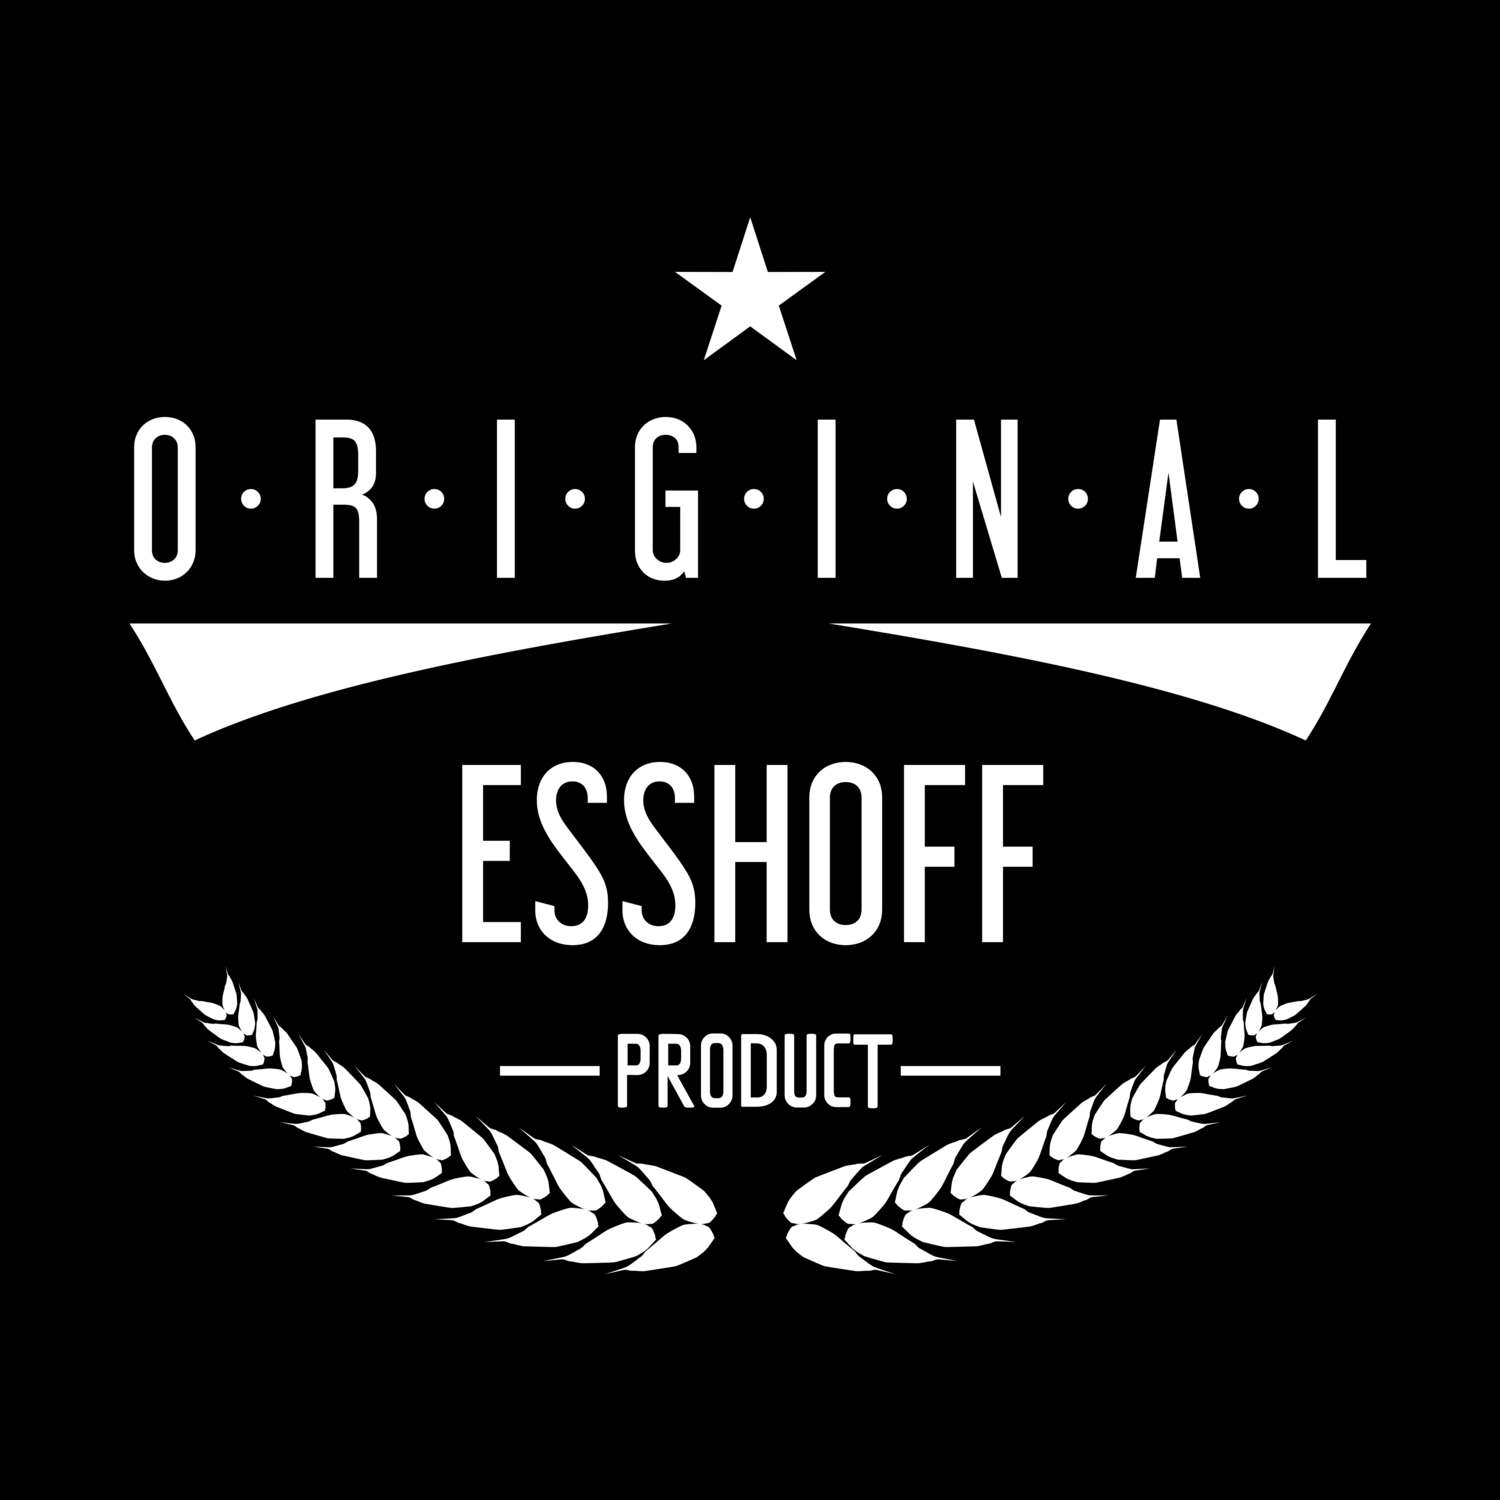 Esshoff T-Shirt »Original Product«